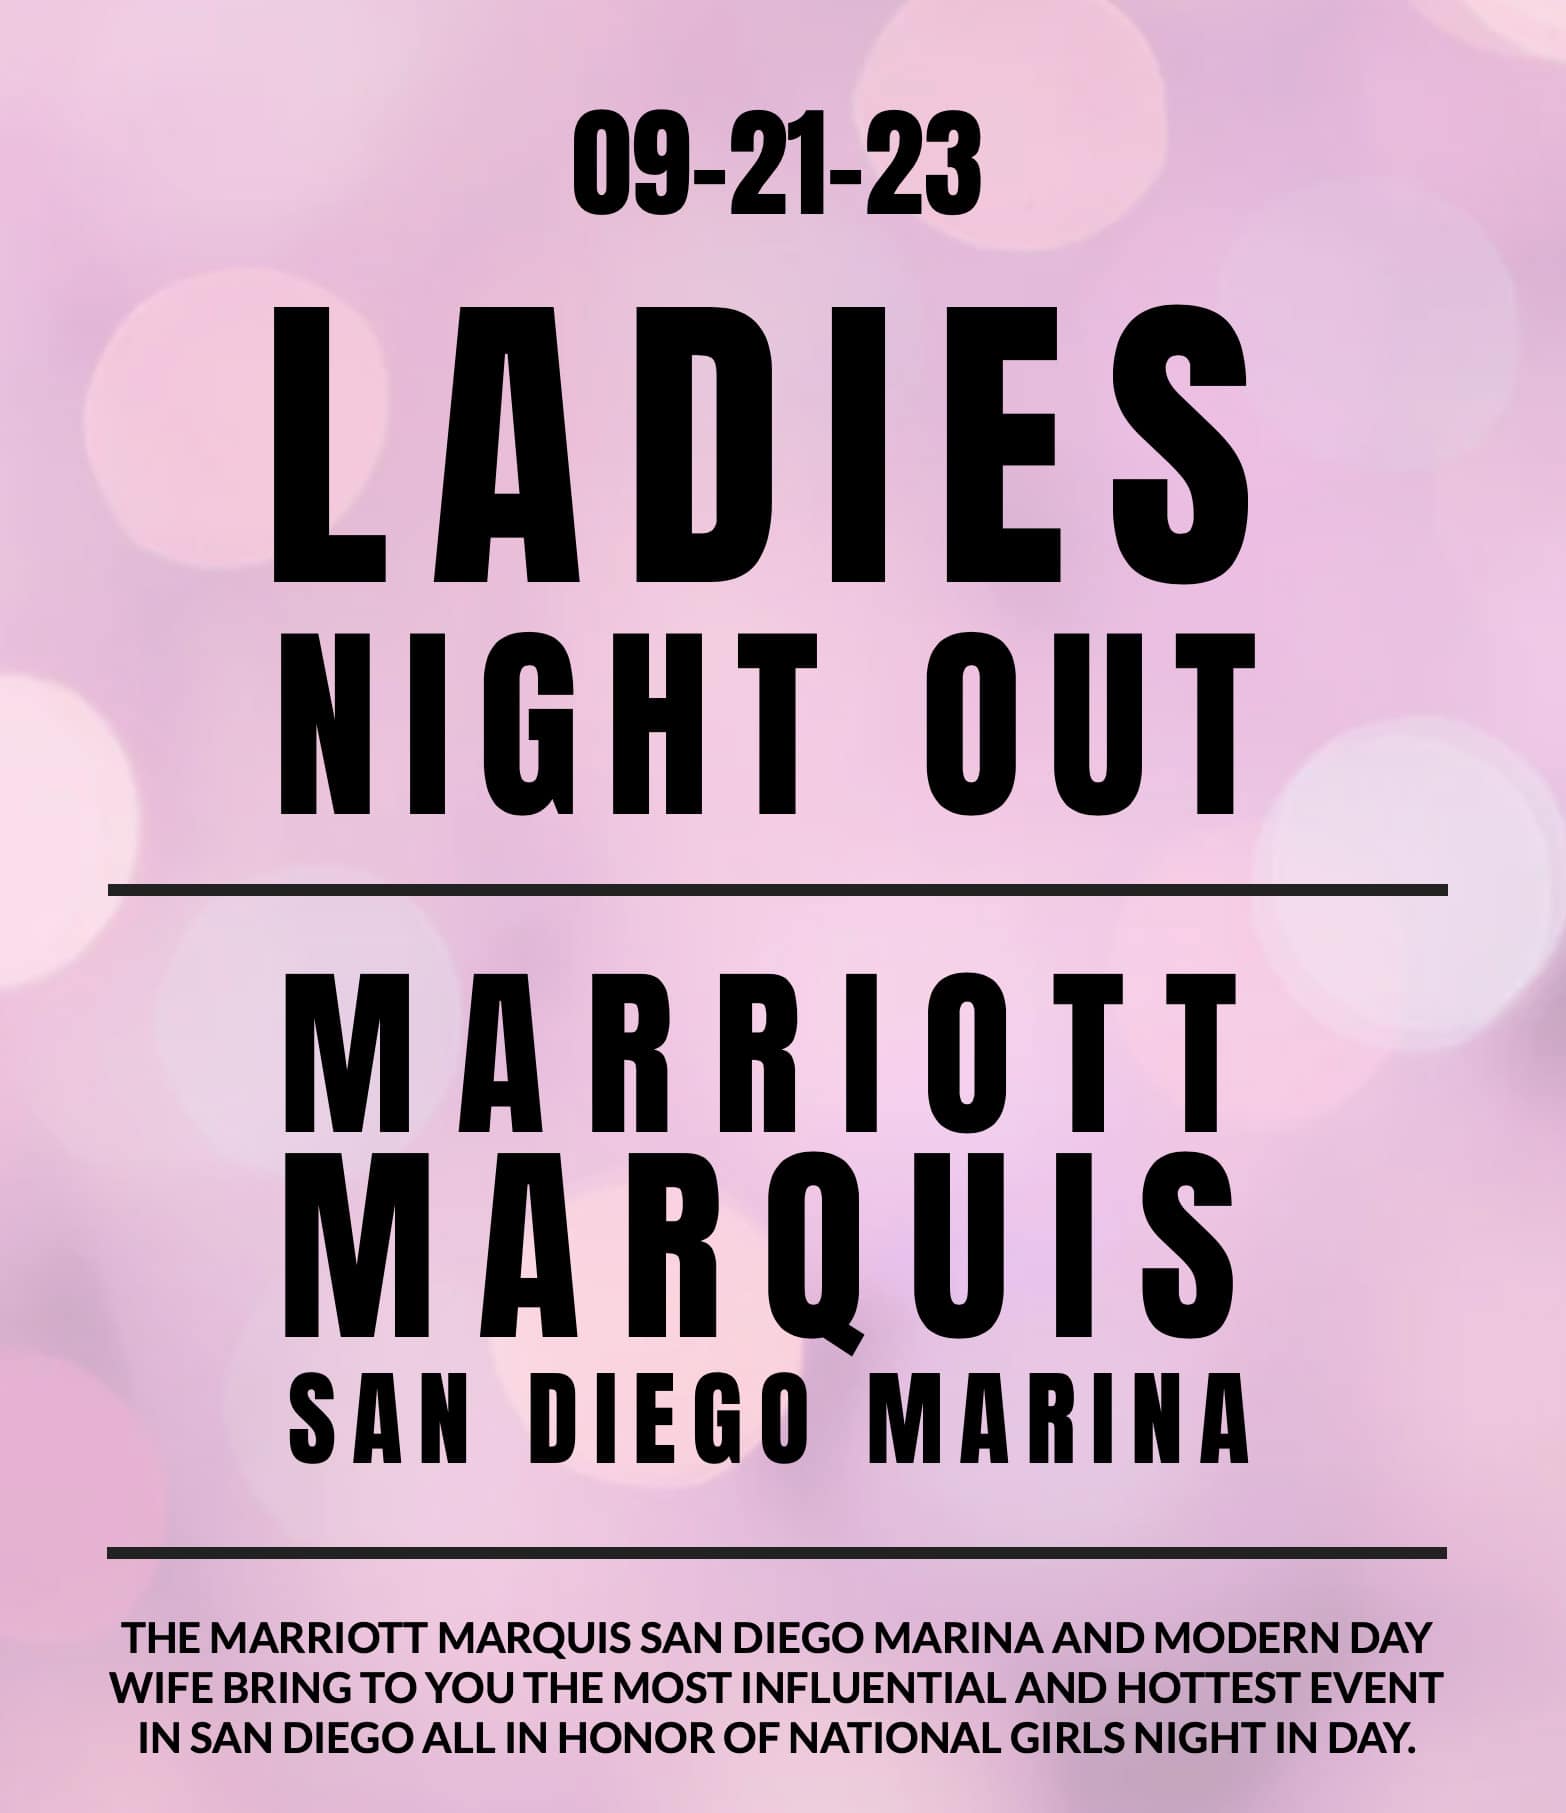 Ladies Night Out Marriott Marquis San Diego Marina